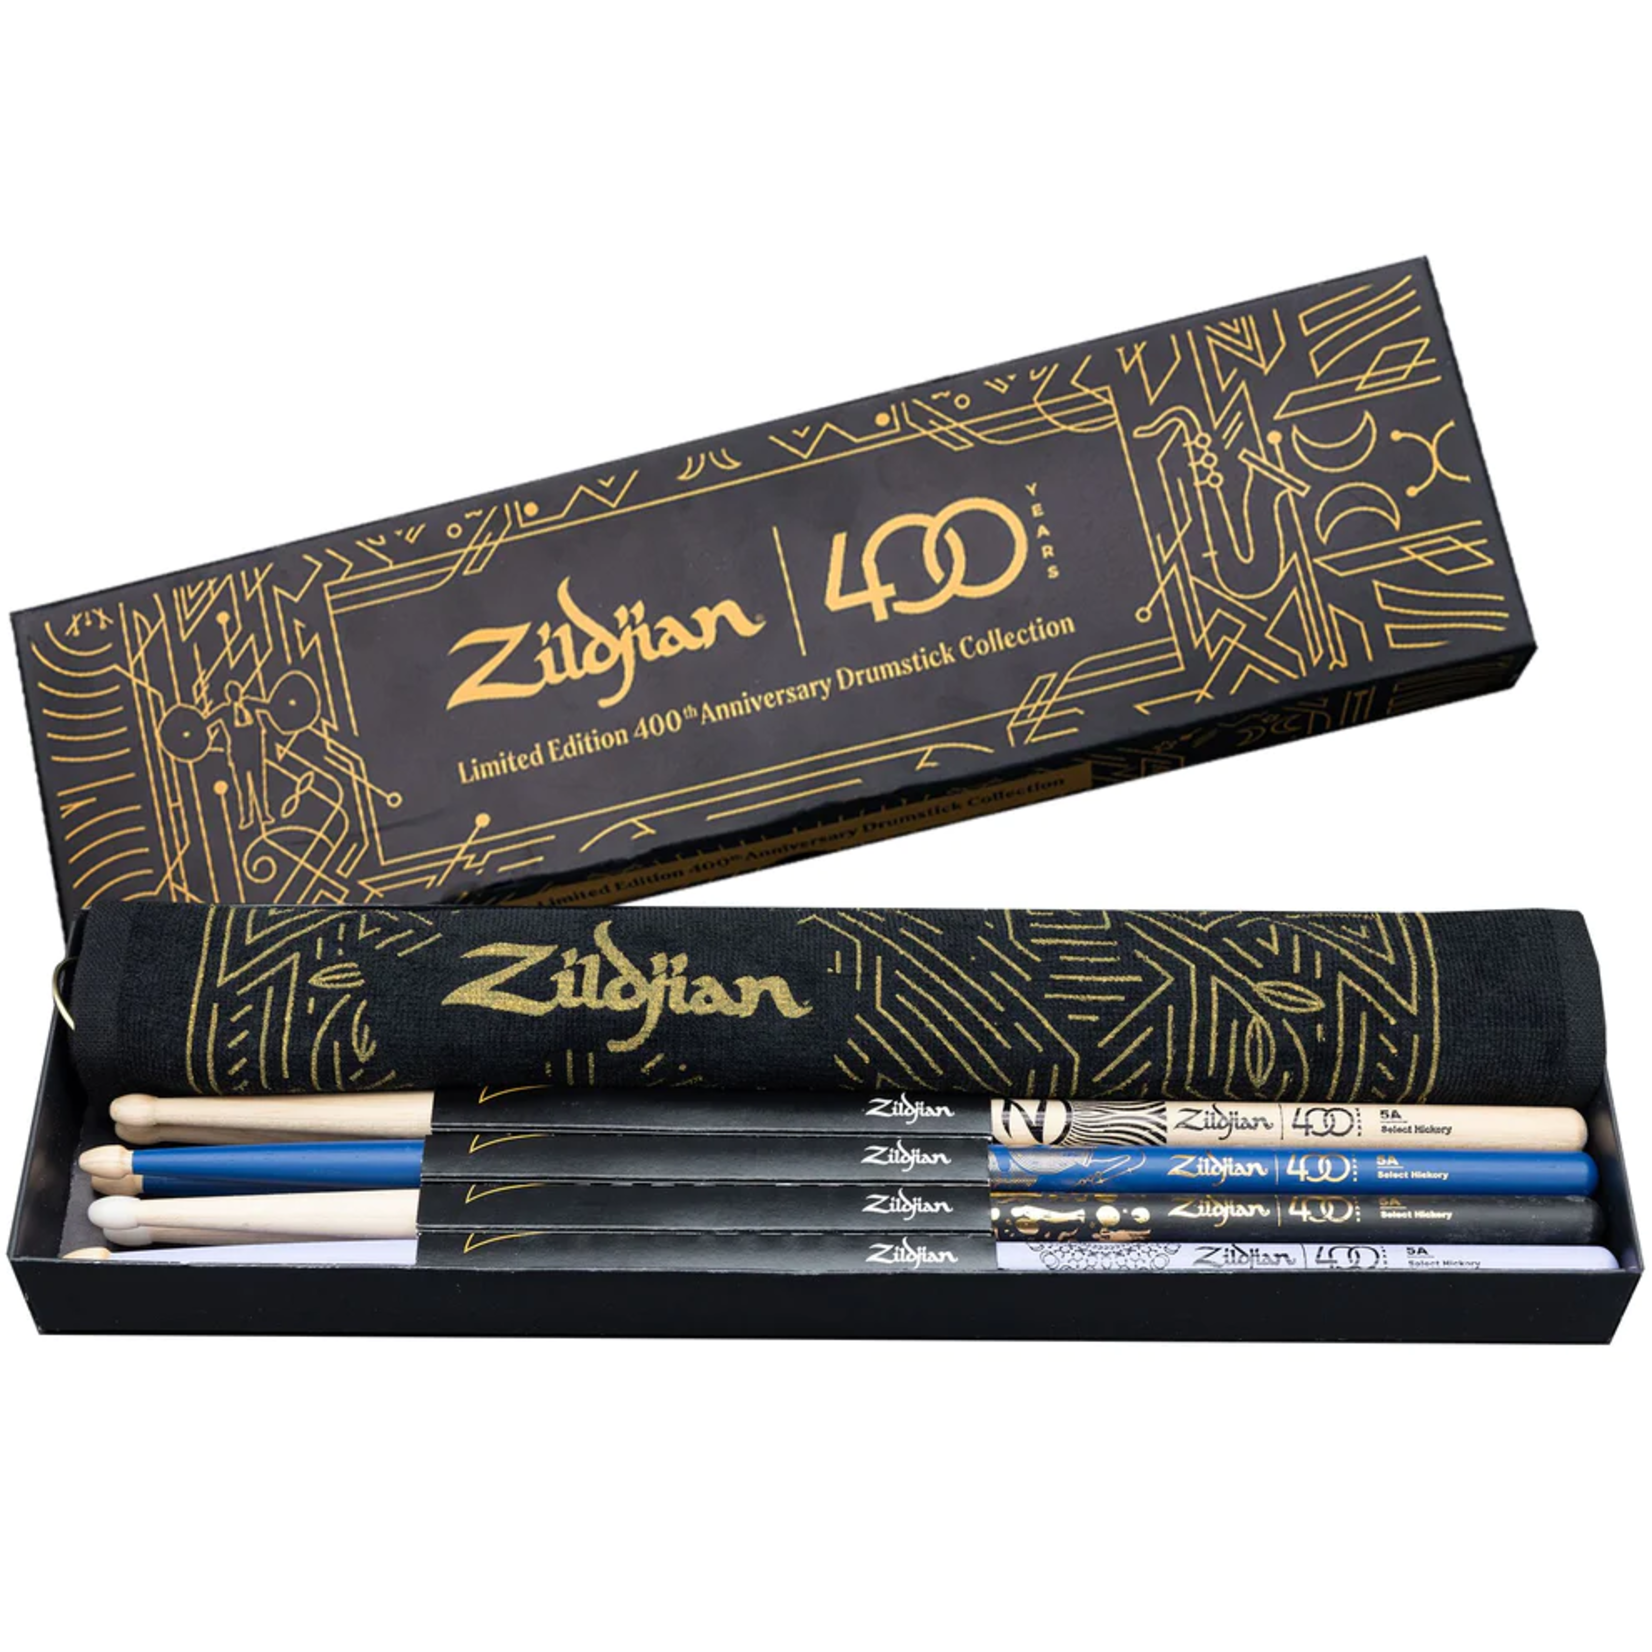 Zildjian Zildjian Limited Edition 400th Anniversary Drumstick Bundle (5A)